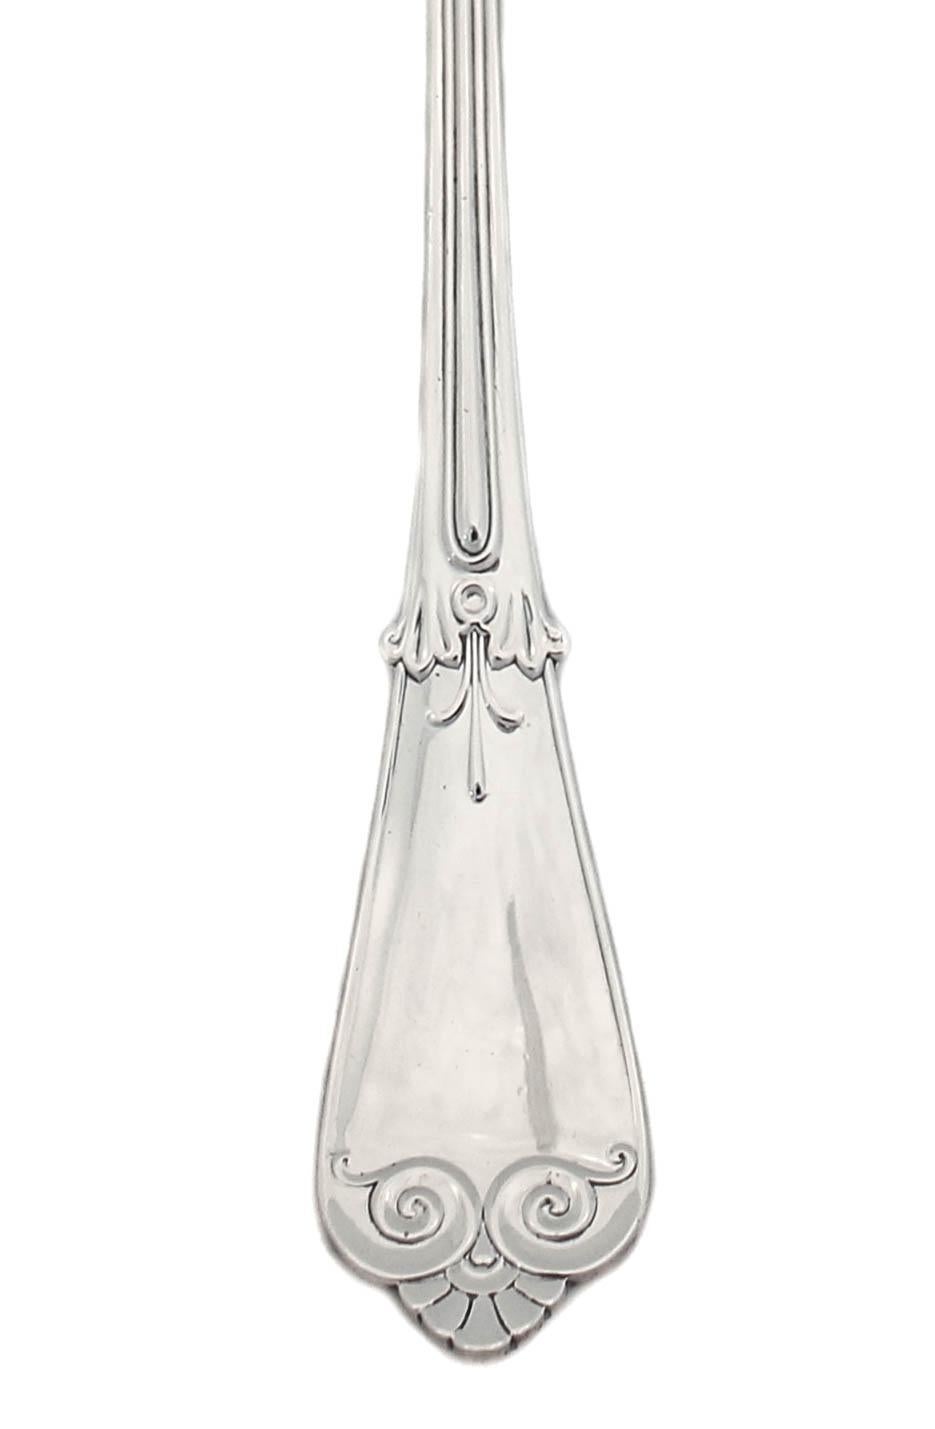 American Tiffany Sterling Silver Platter Spoon 1869